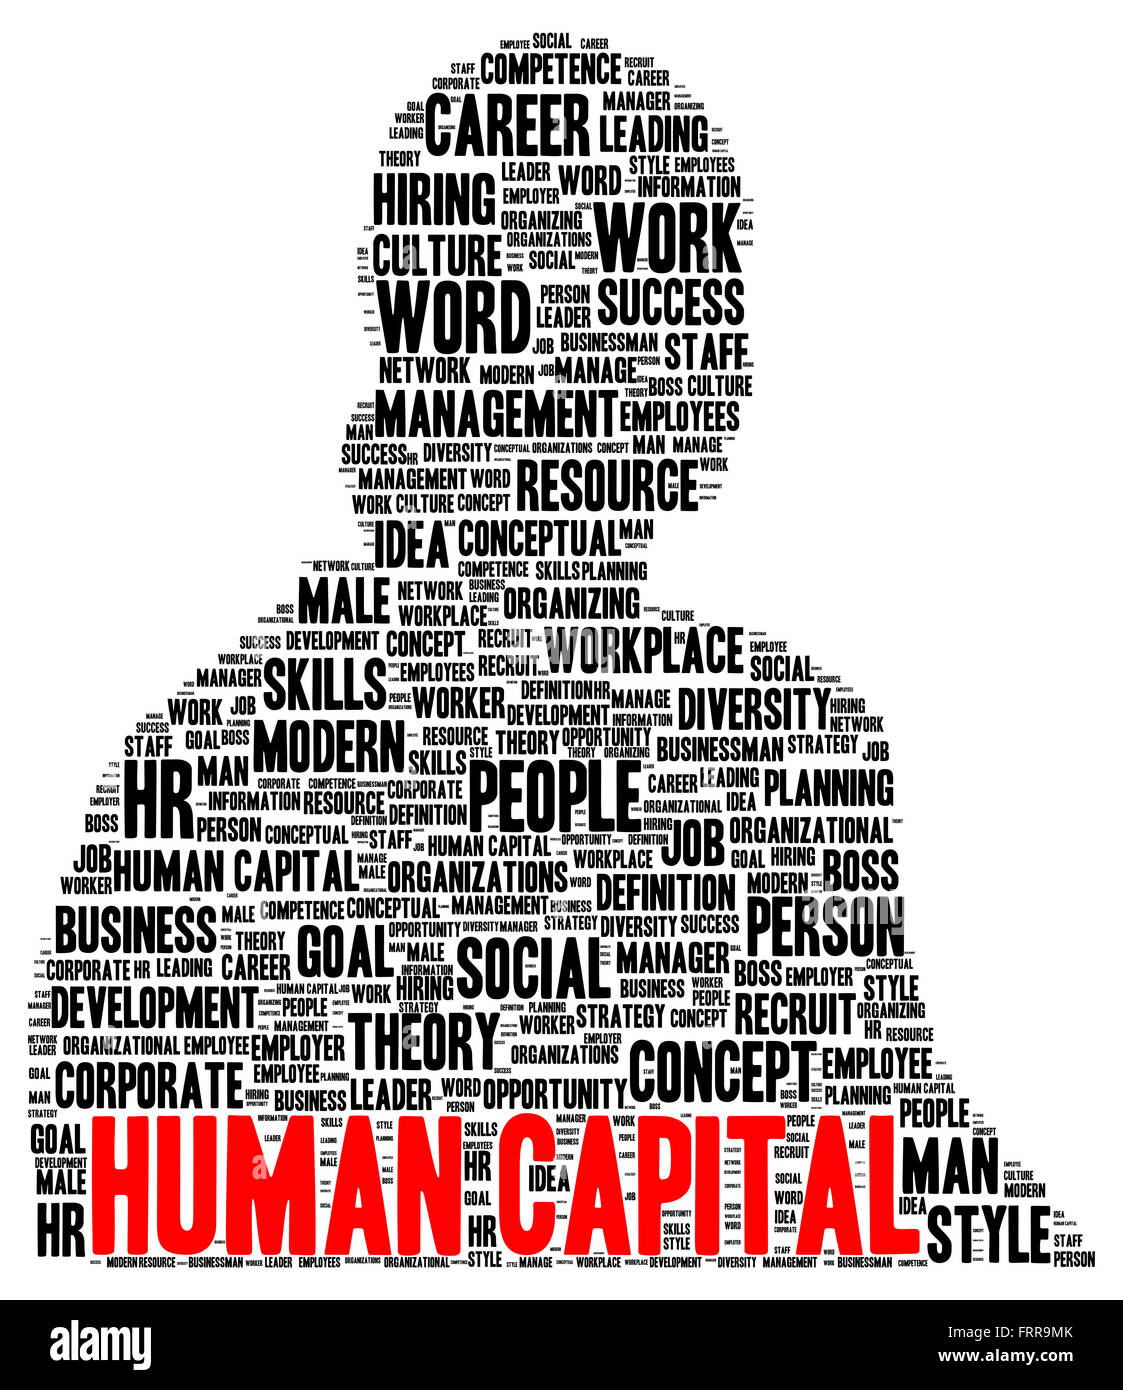 human capital planning definition